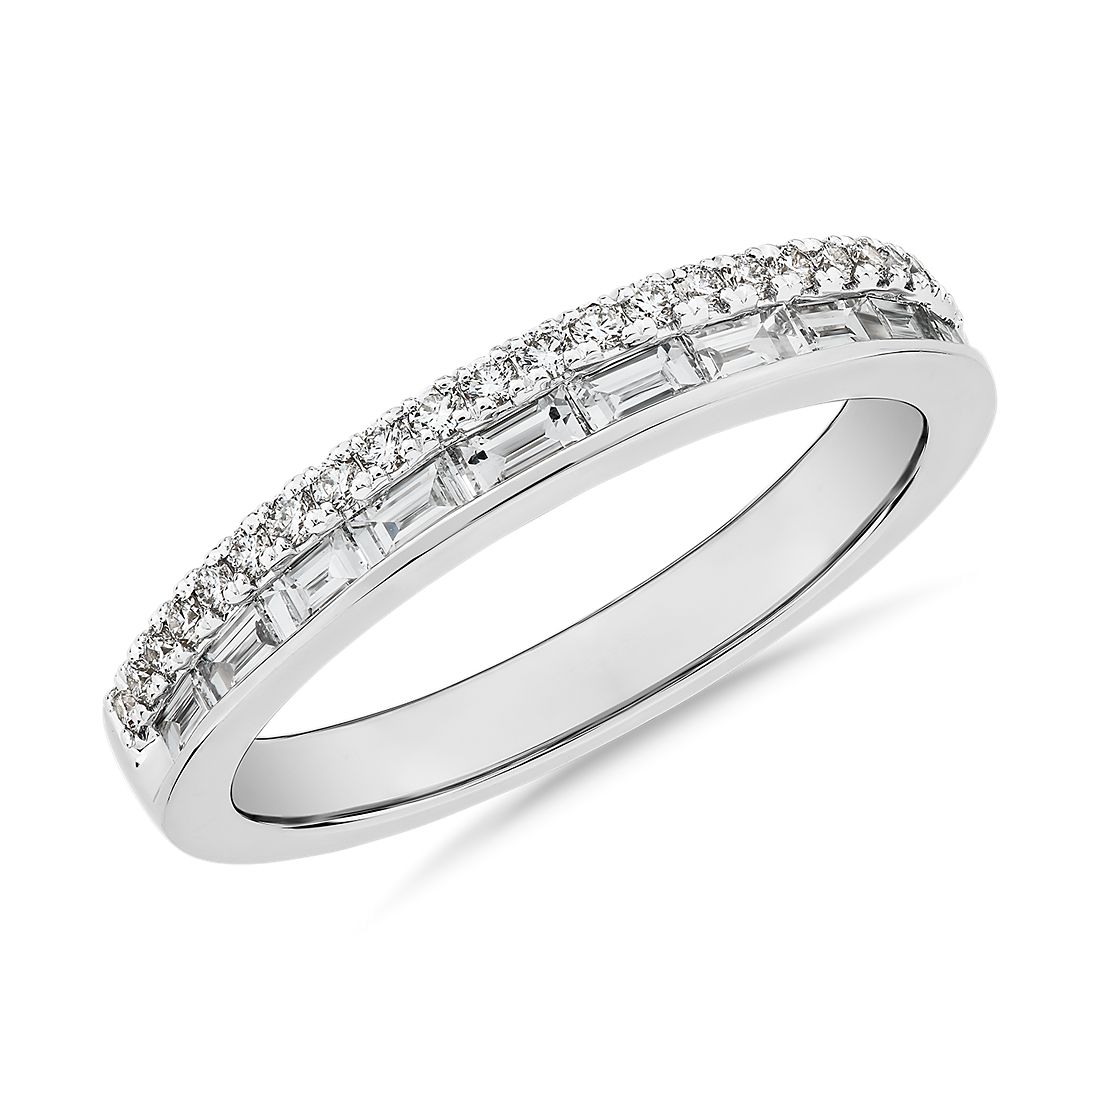 ZAC ZAC POSEN Double Row Baguette & Pavé Diamond Wedding Ring in 14k White Gold (3/8 ct. tw.)